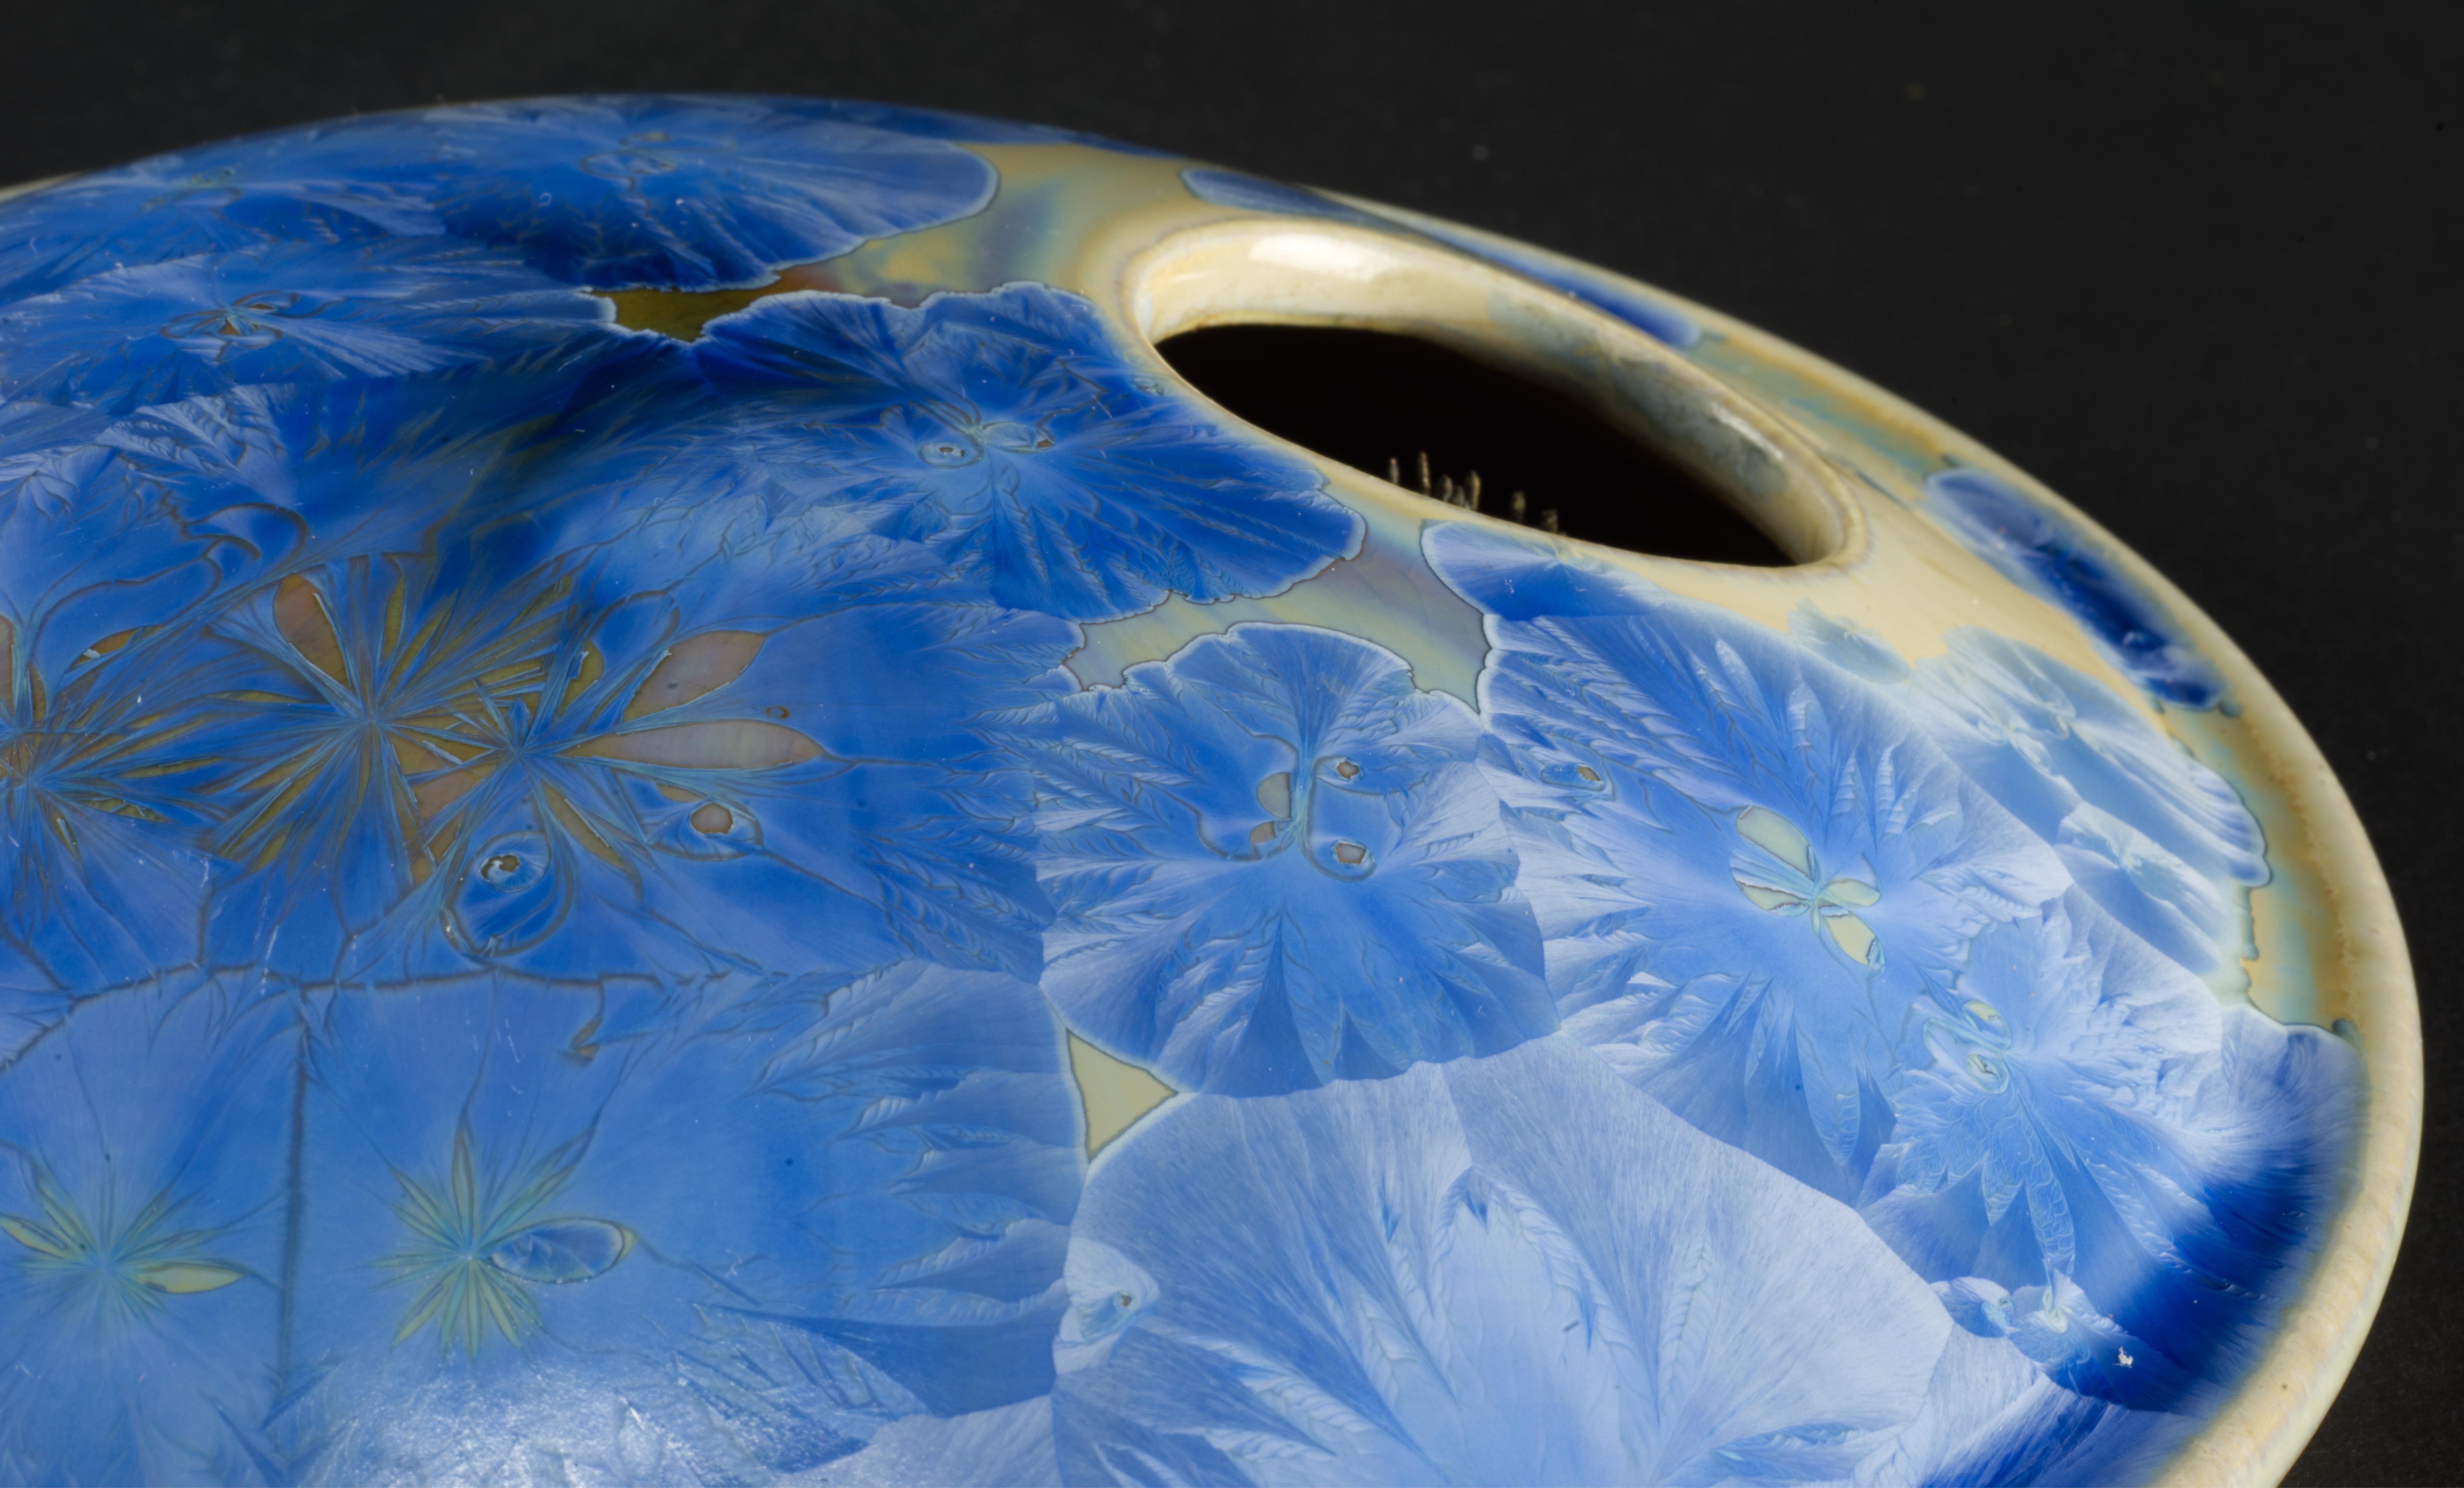 Crystalline Glaze Ceramic Ikebana Vase, Blue, American Studio Pottery, 2003 For Sale 5